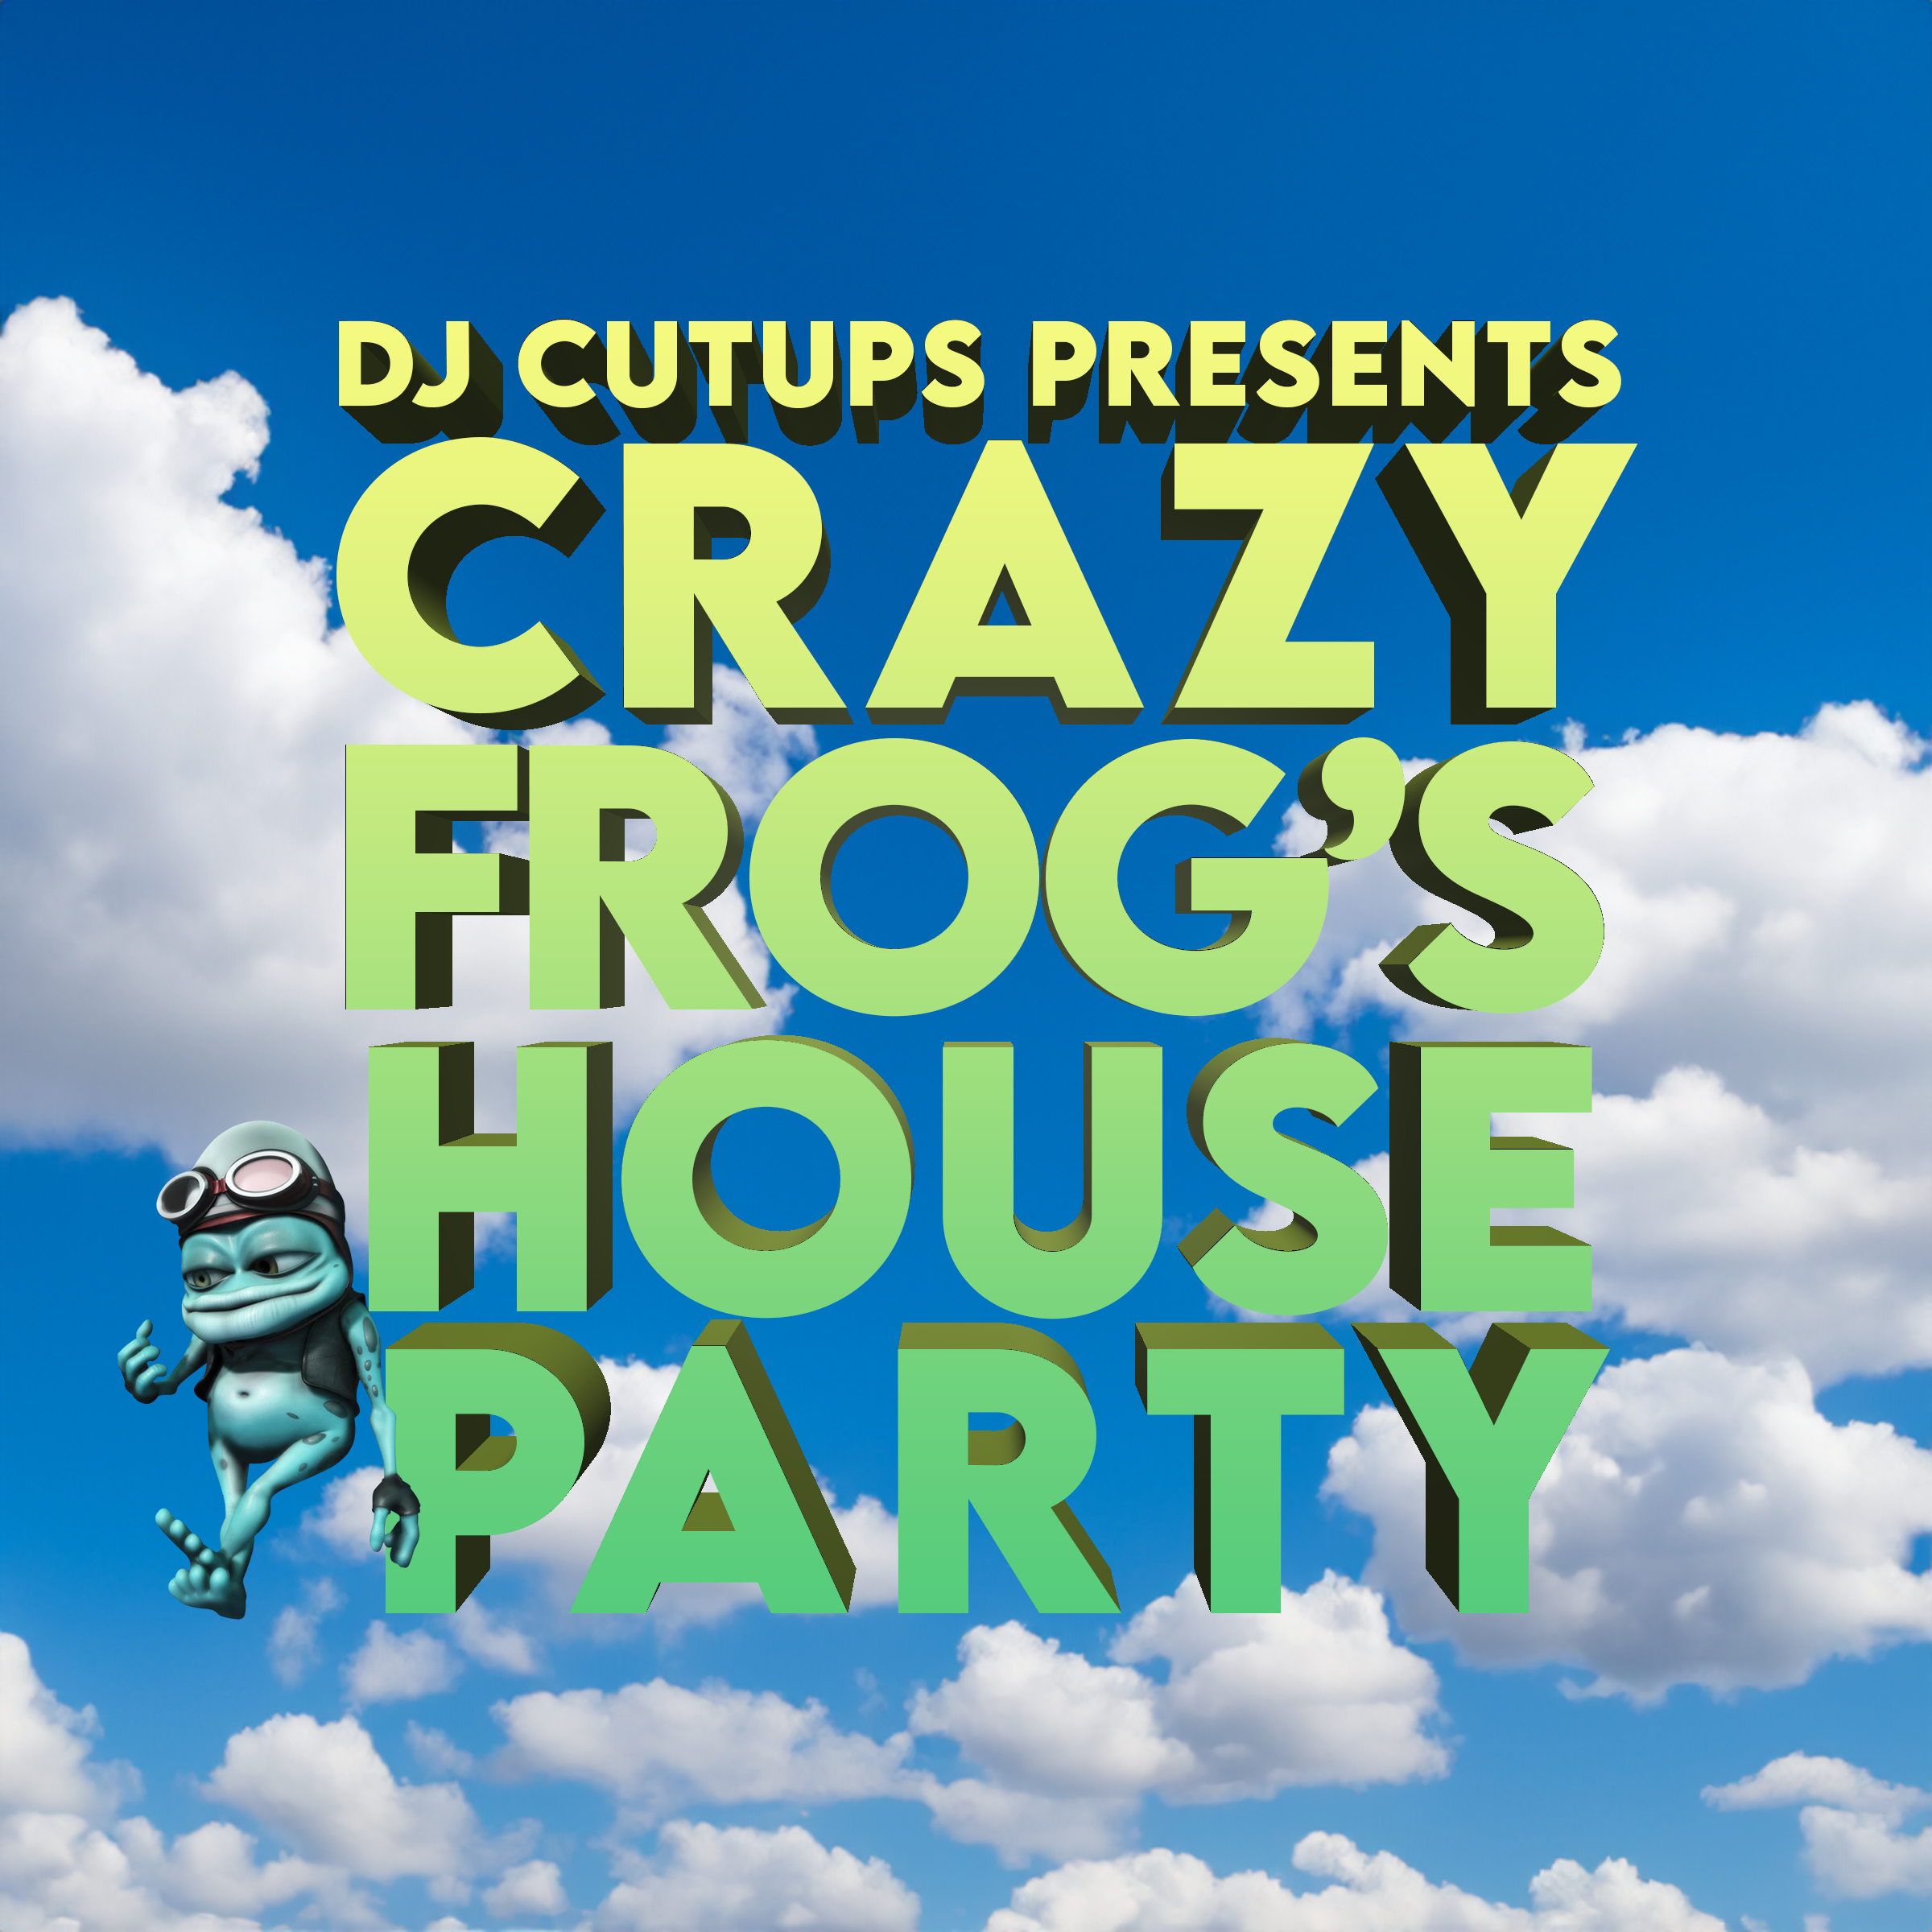 DJ Cutups presents CRAZY FROG’S HOUSE PARTY